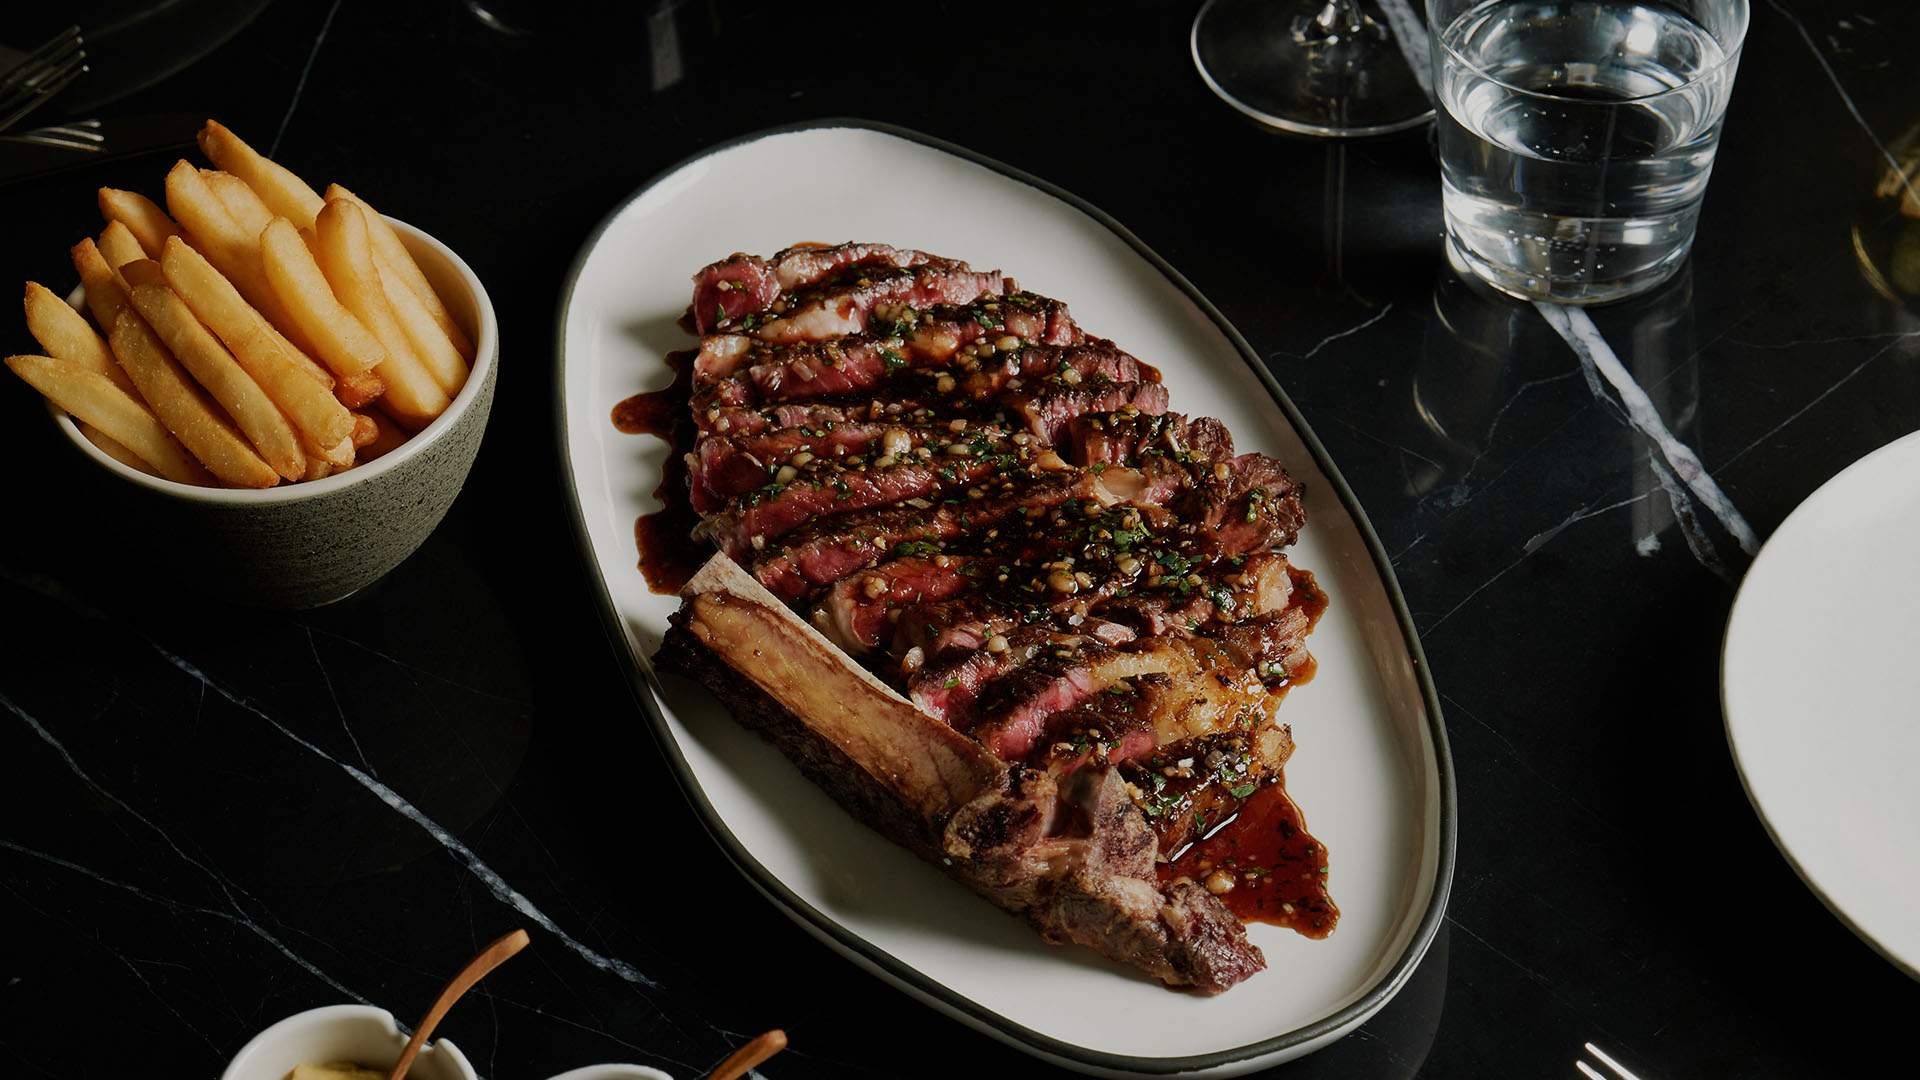 Where to Find the Best Steak in Sydney